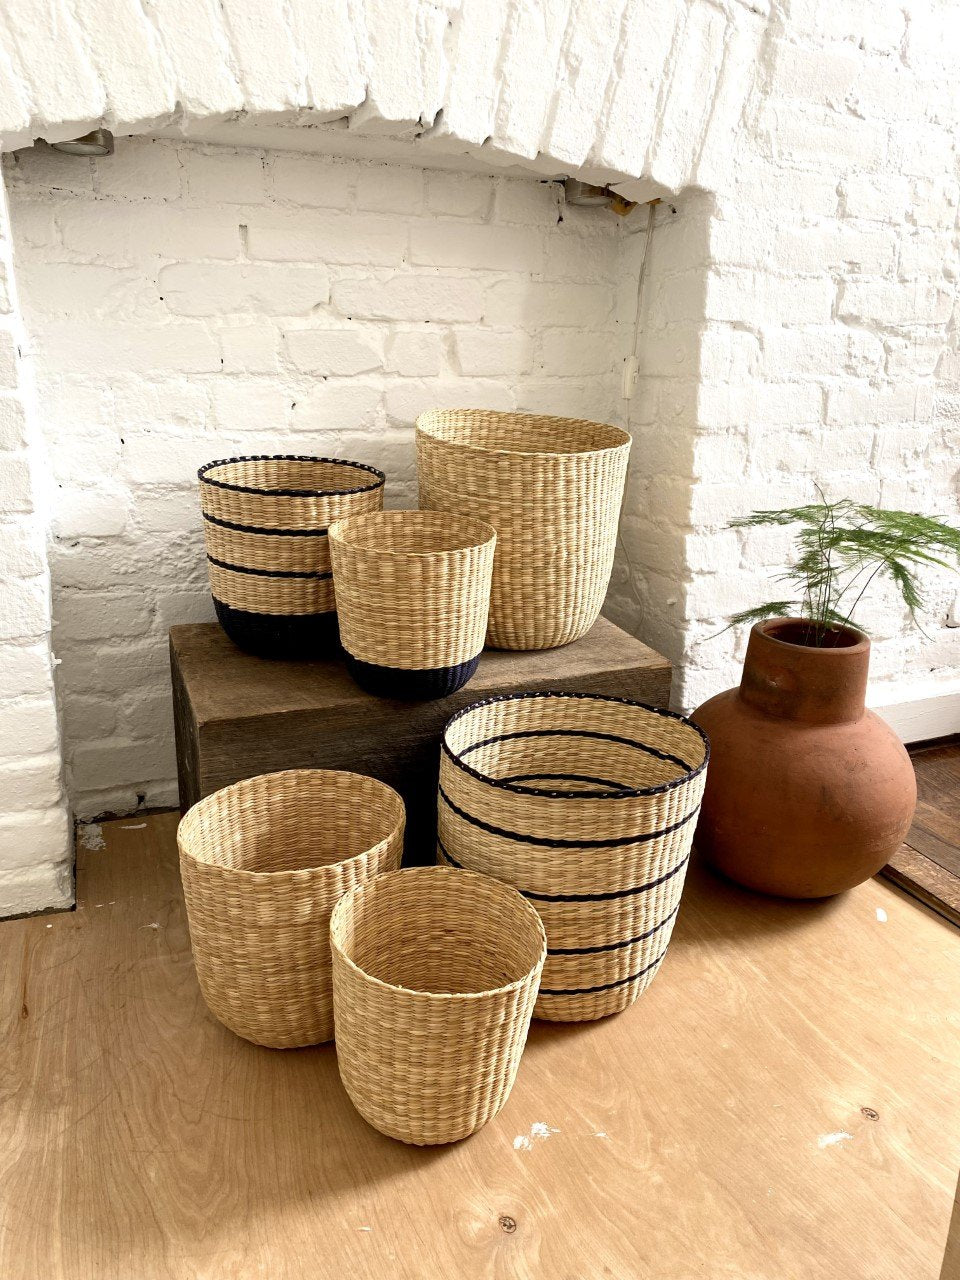 Intiearth Junco Nesting Baskets, Peruvian Home decor, woven natural handmade stacking basket trio